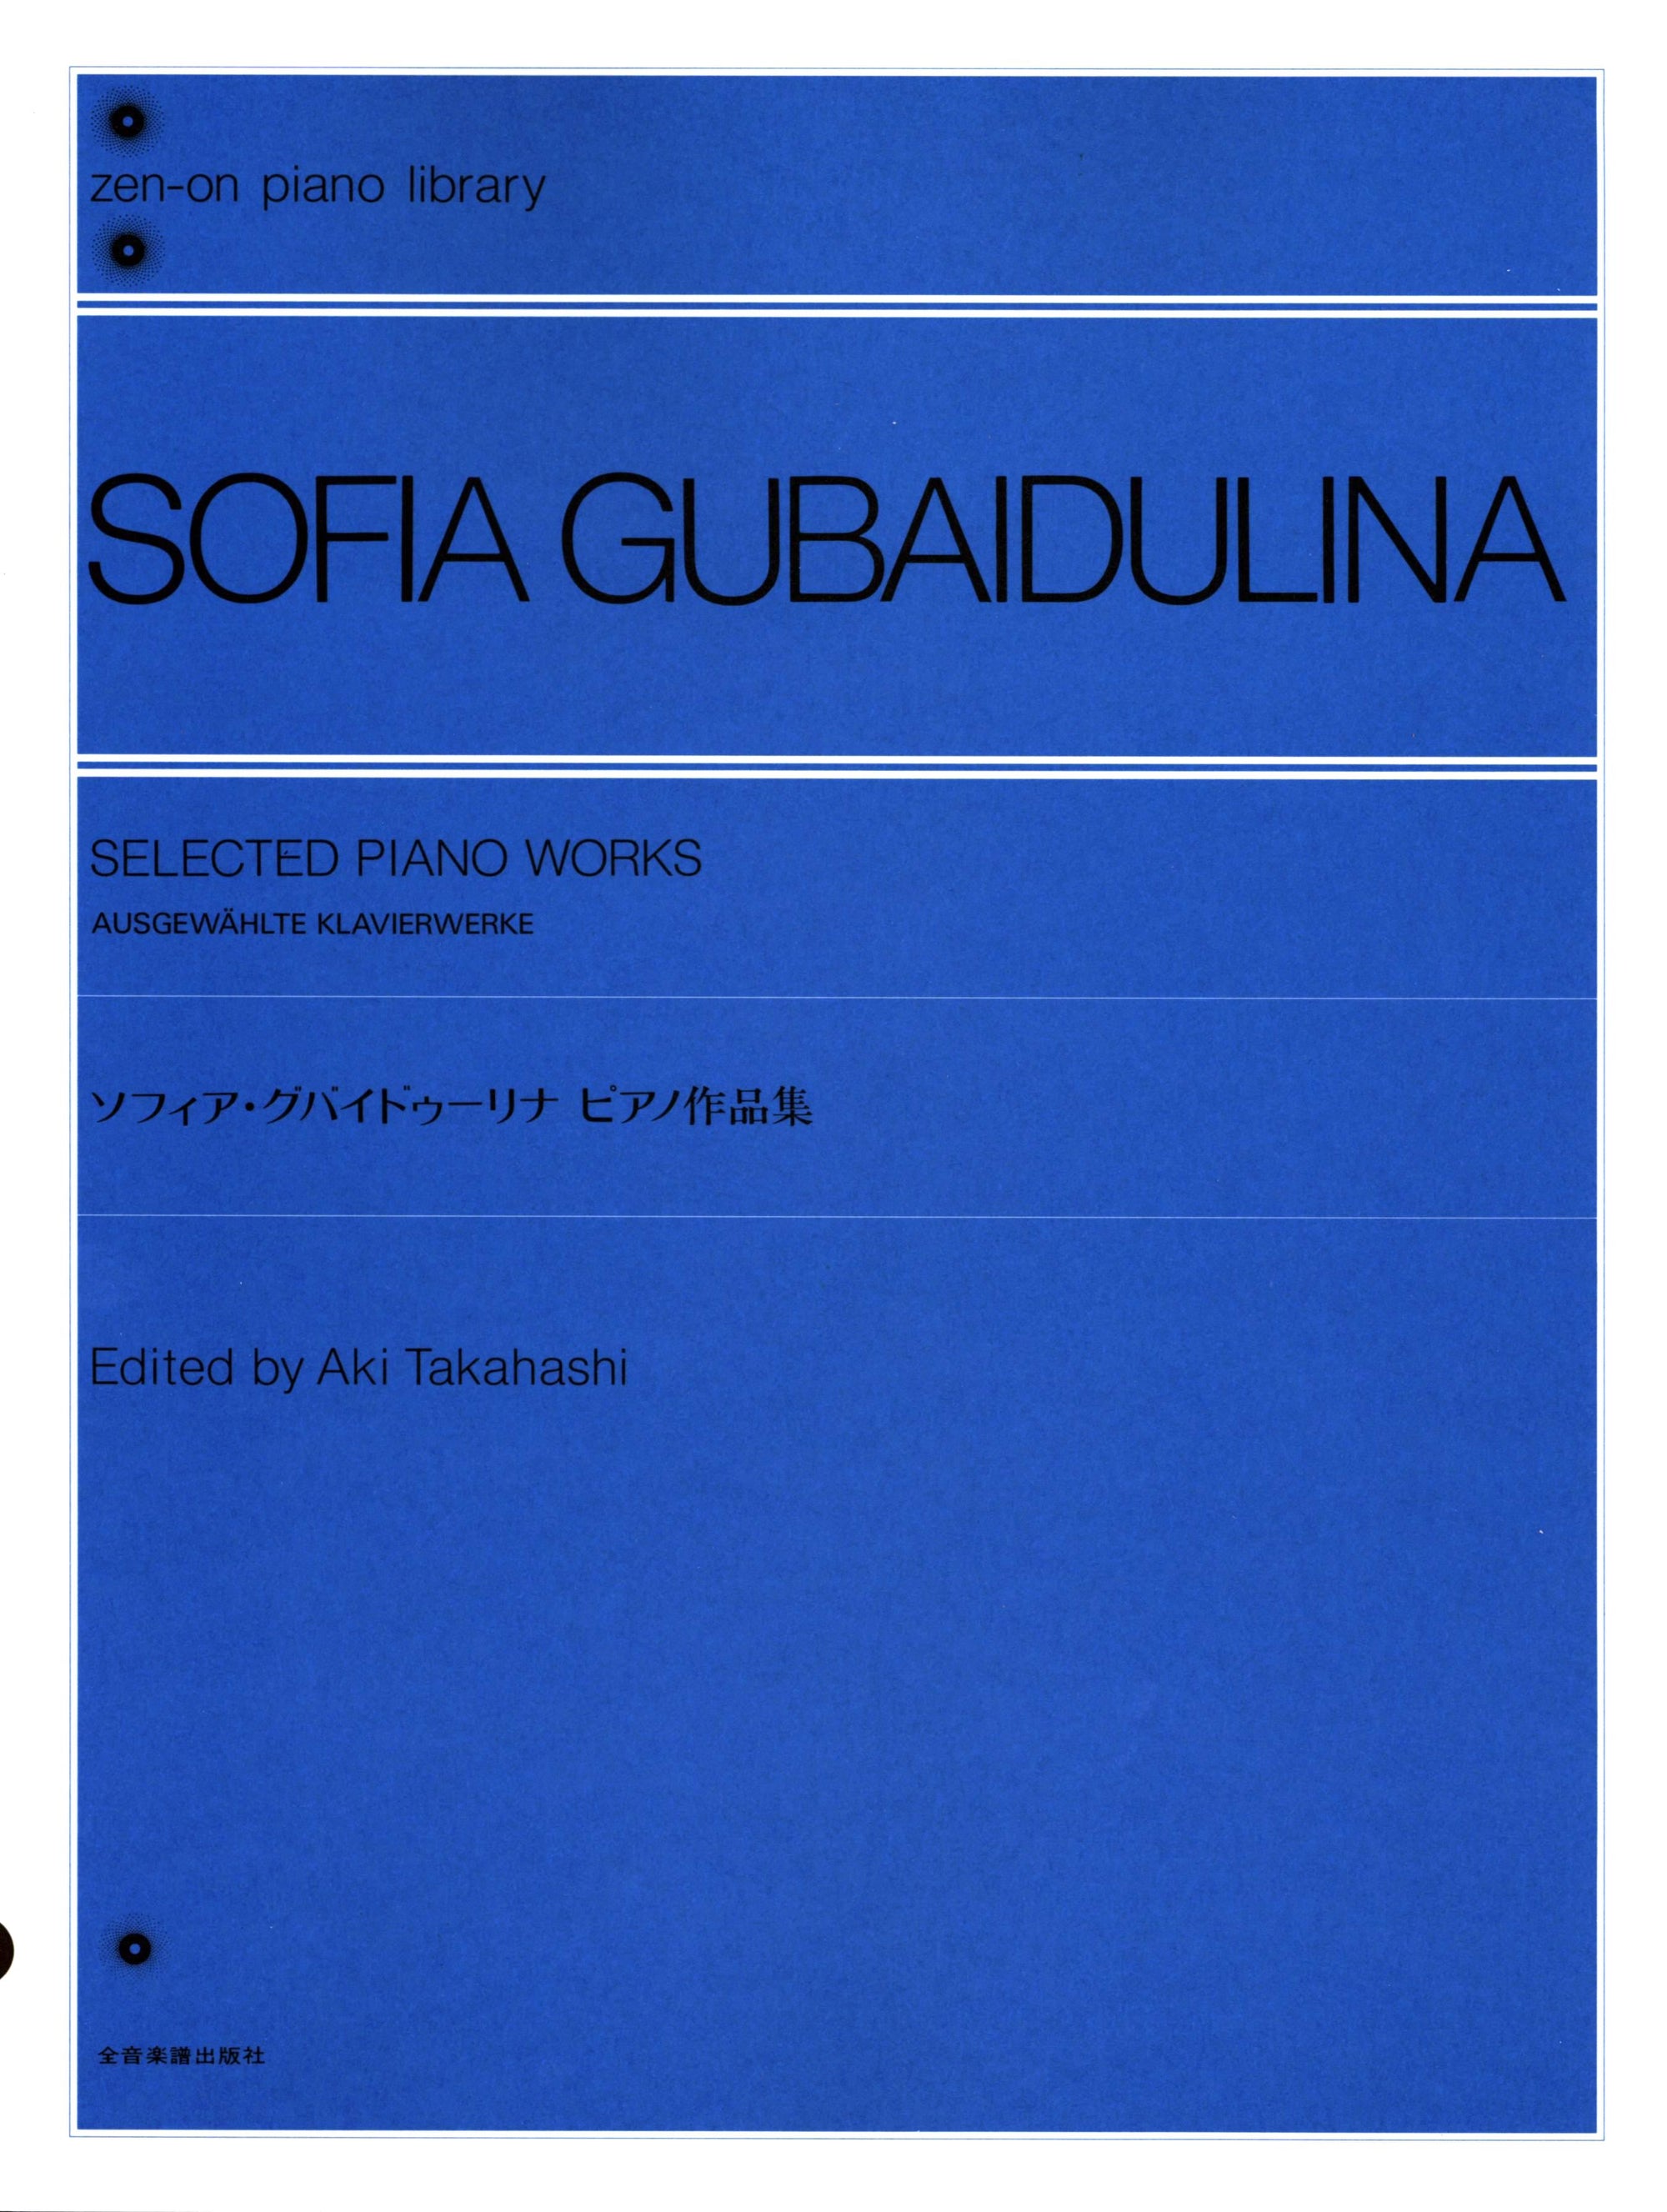 Gubaidulina: Selected Piano Works